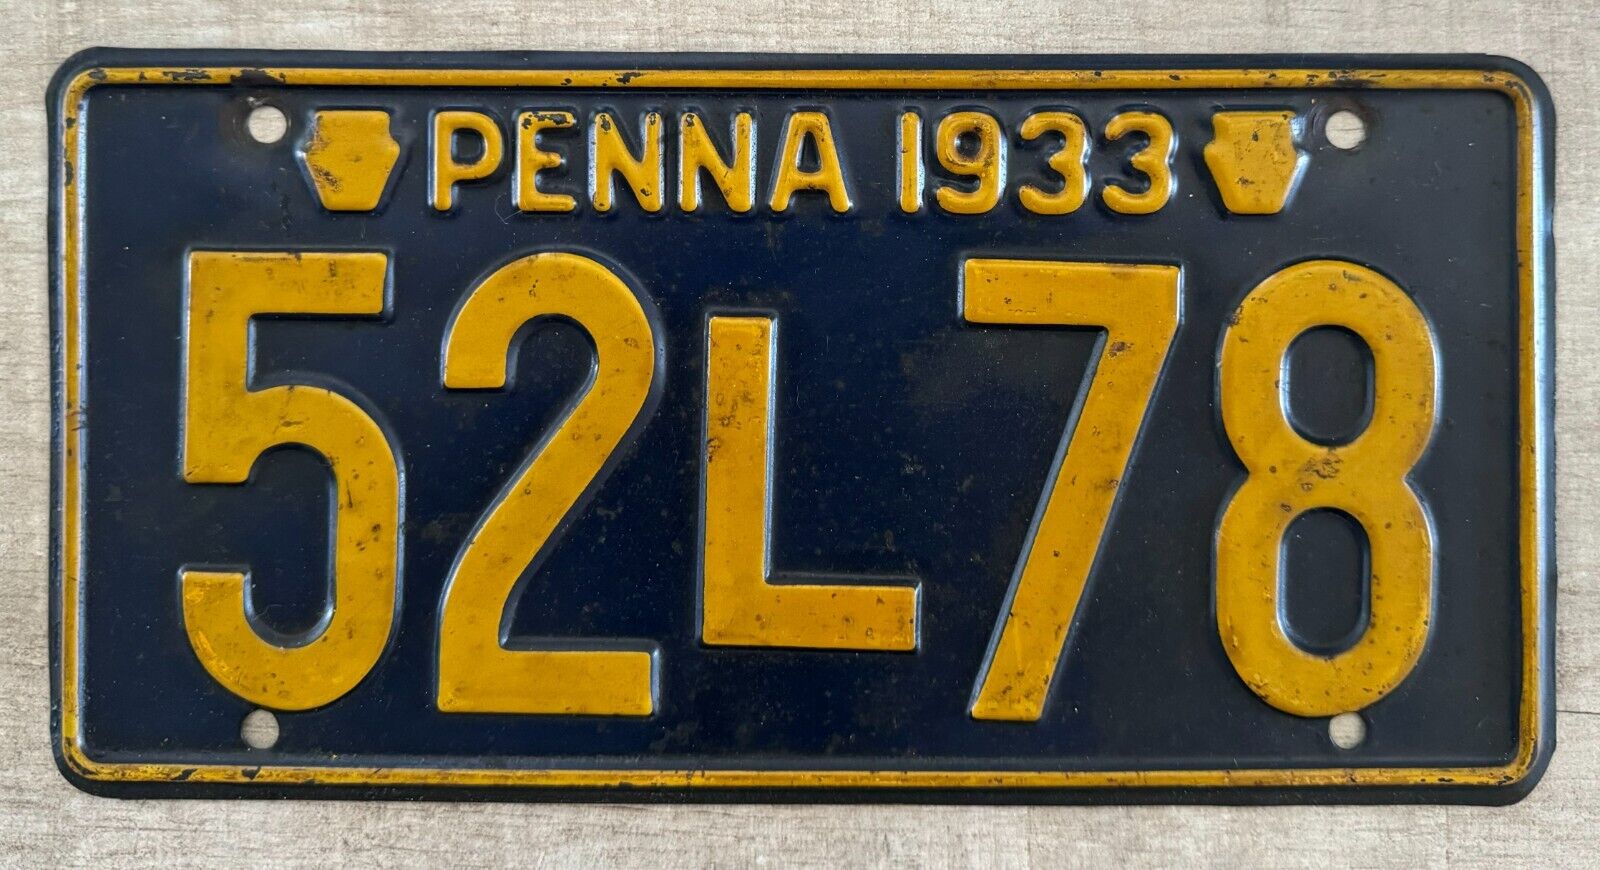 1933 Pennsylvania License Plate - Very good original paint